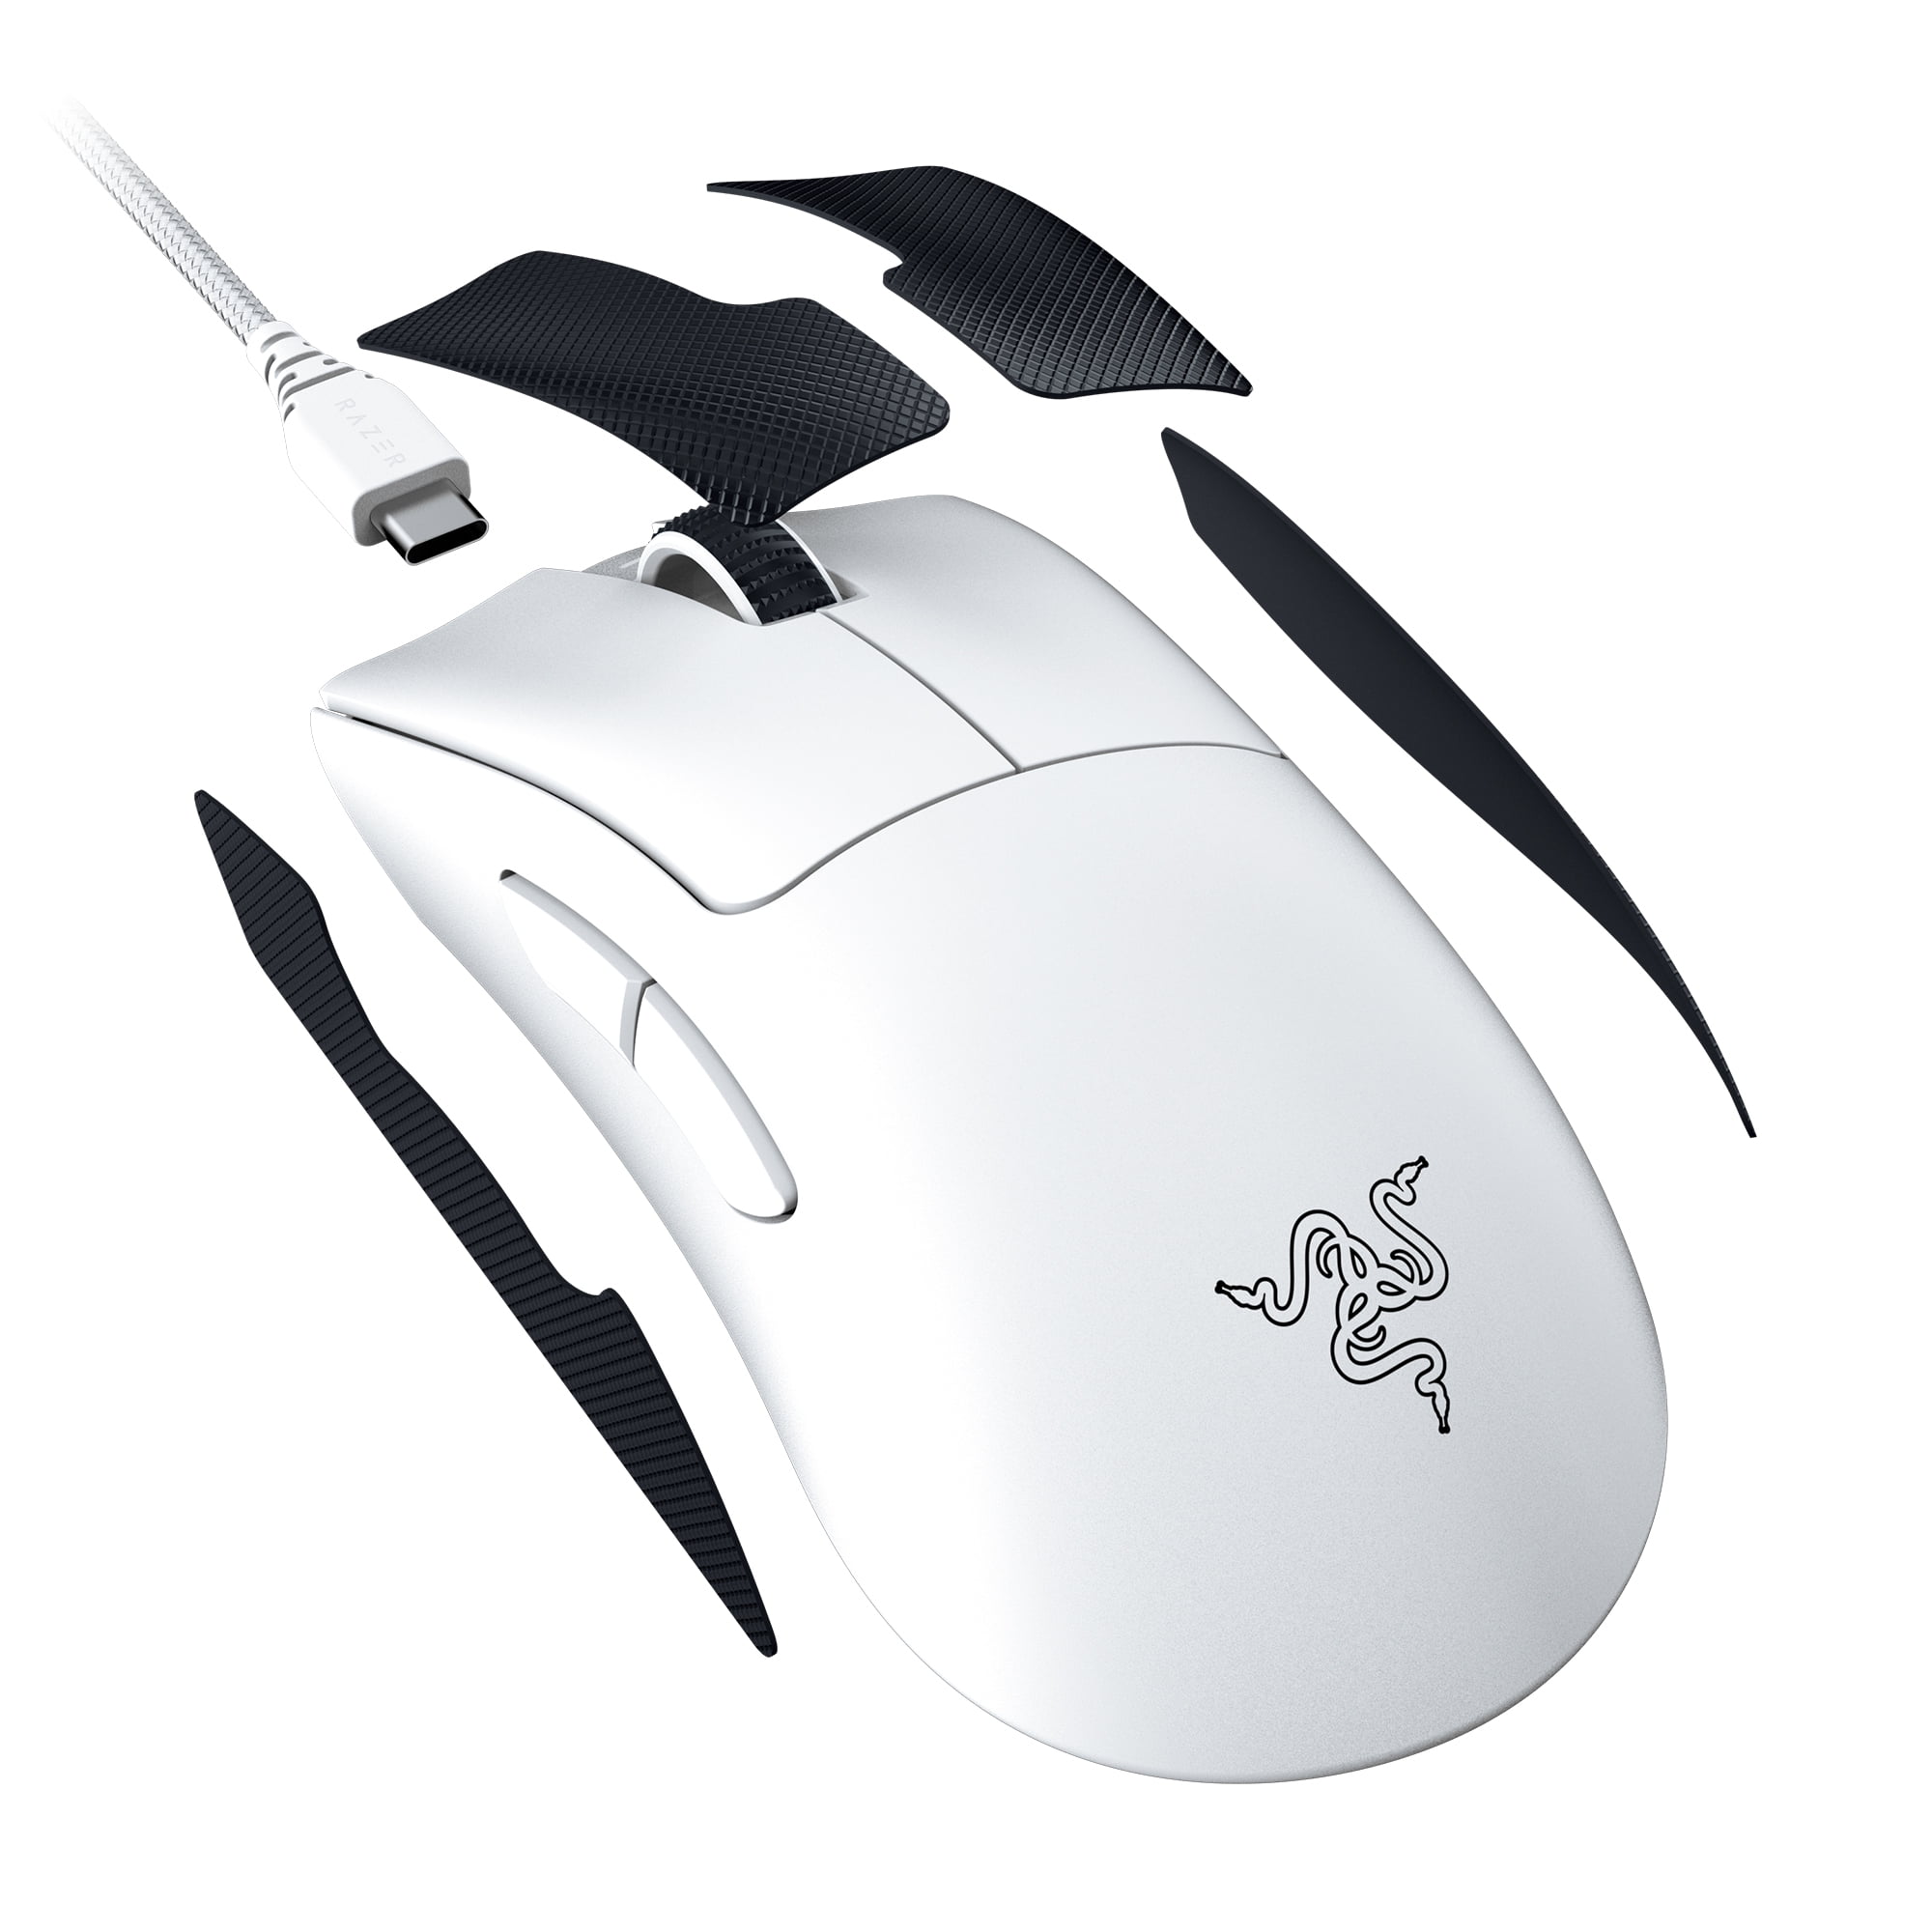 Razer DeathAdder V3 Pro Wireless Esports Gaming Mouse, 64g, 5 